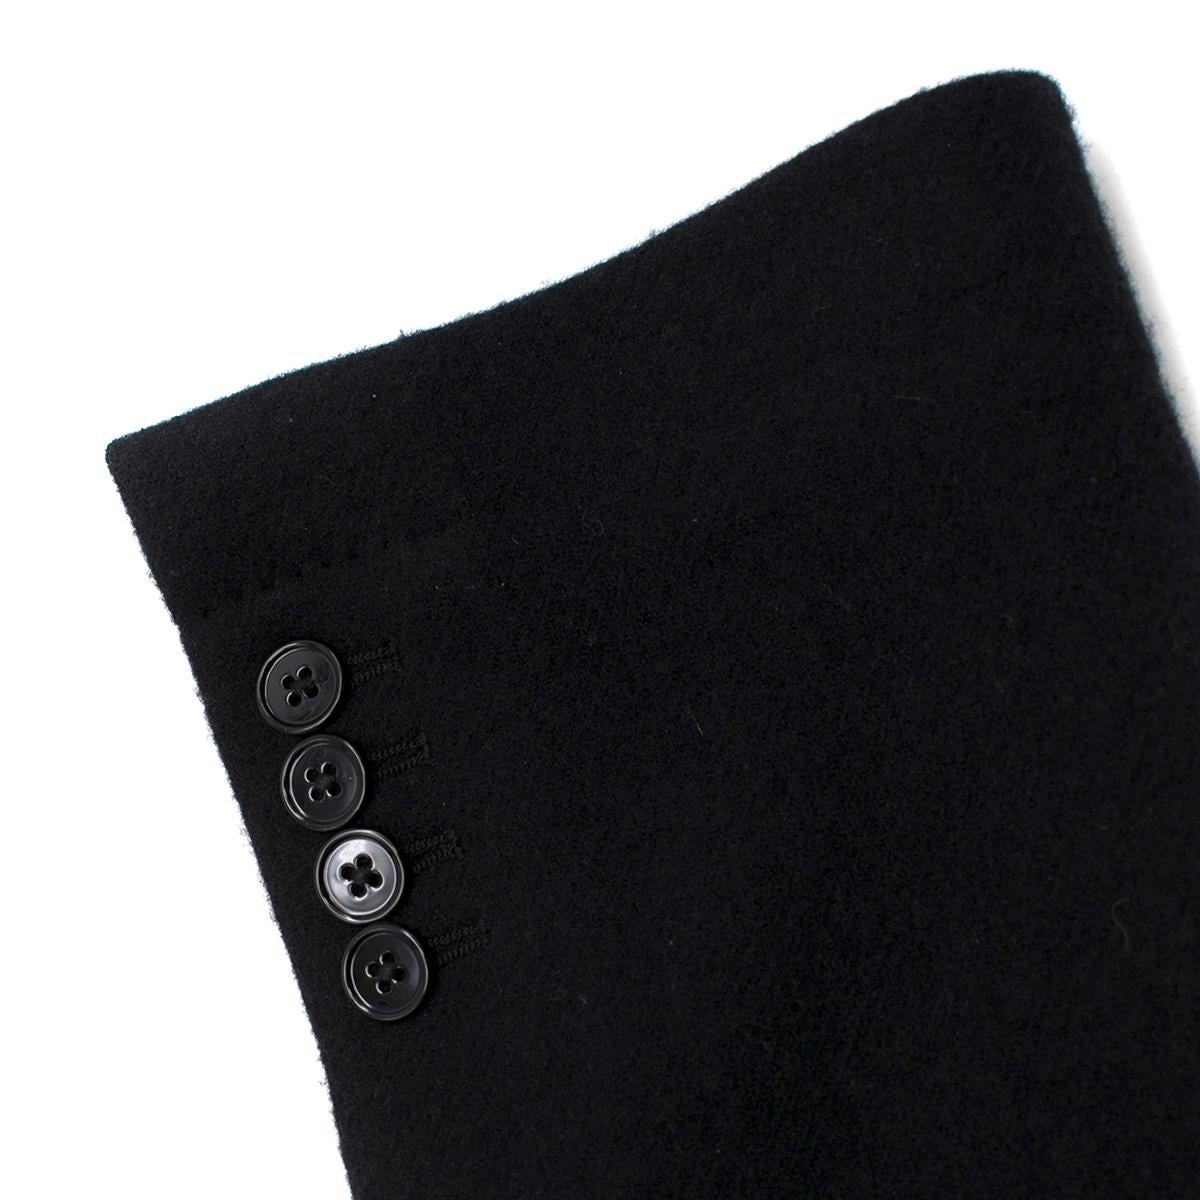 Dolce & Gabbana Men's Black Wool-blend Tailored Jacket estimated SIZE S 6